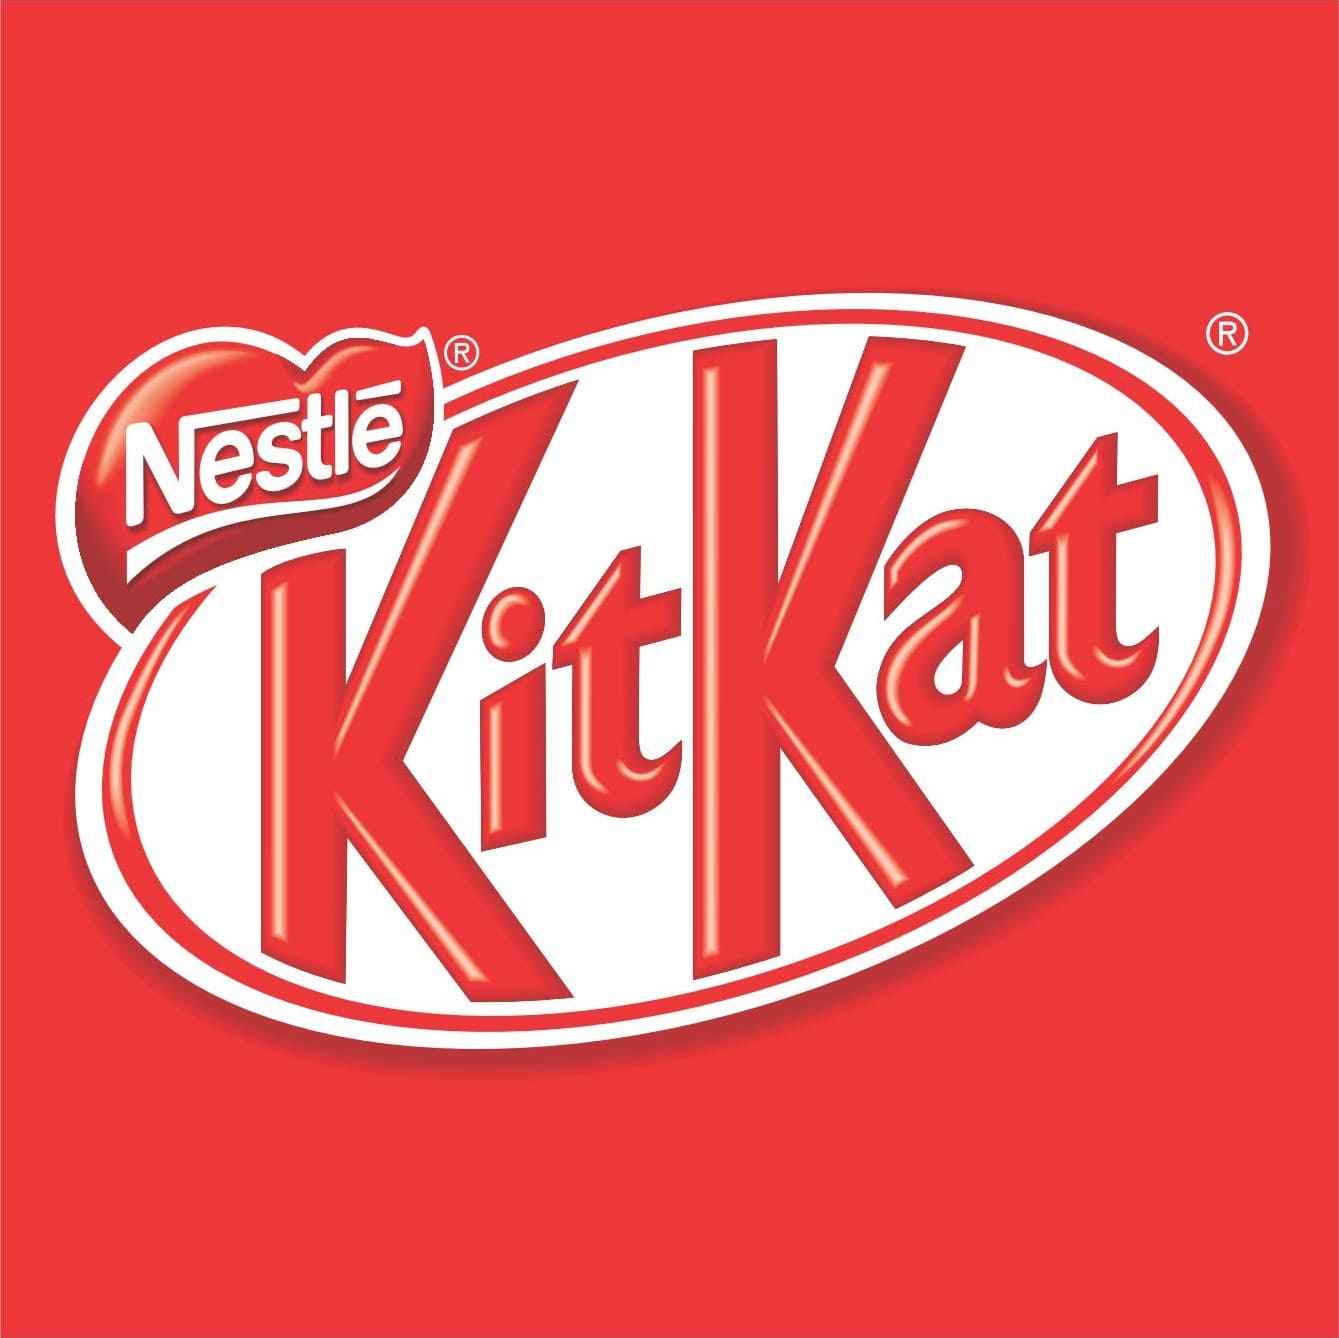 Kit Kat Logo [Nestle] Download Vector